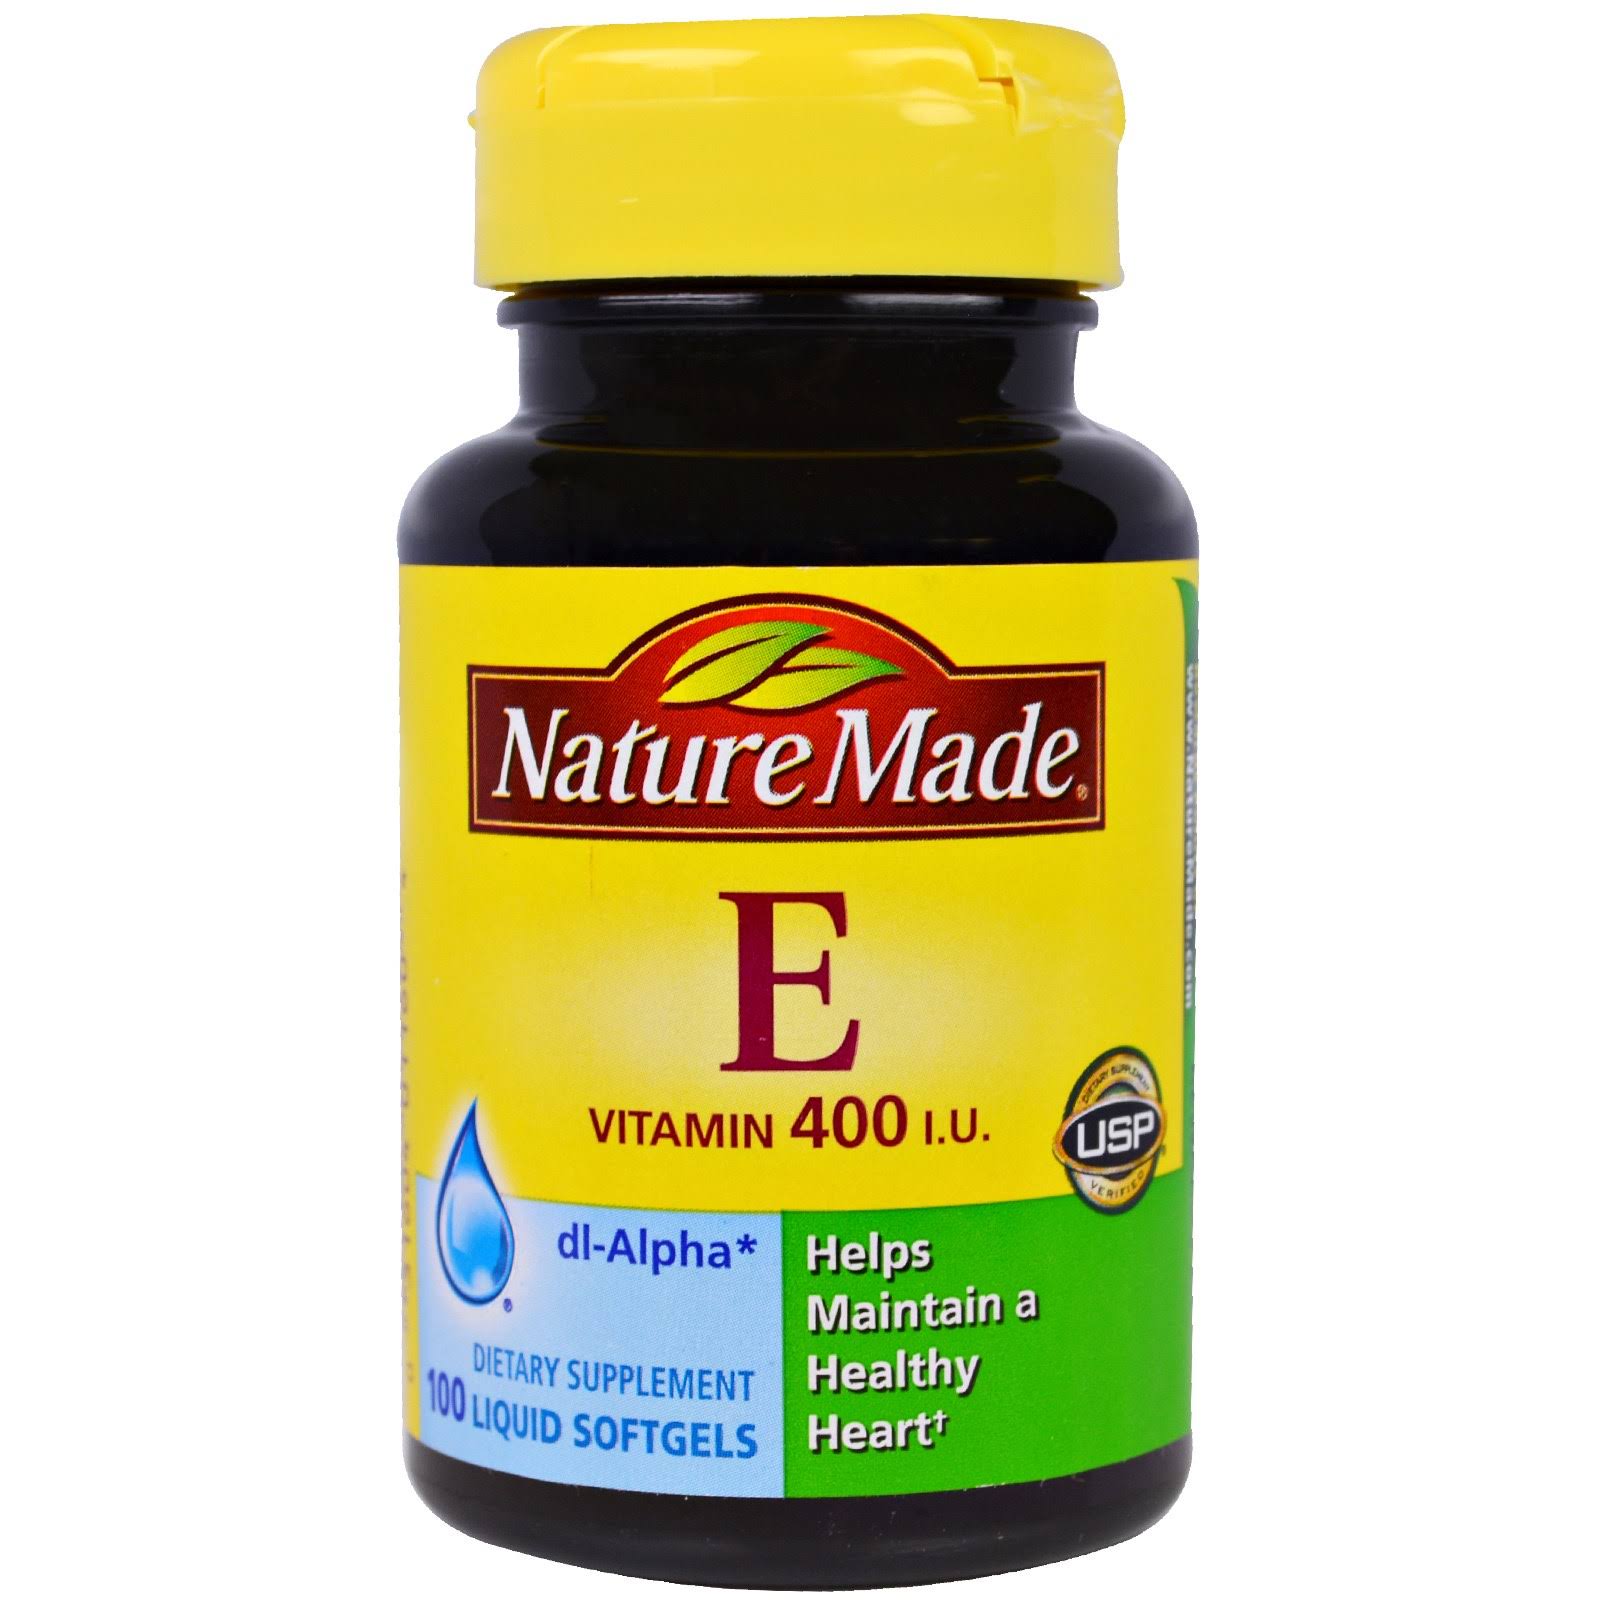 Nature Made Vitamin E 400 I.U. Supplement - 100ct